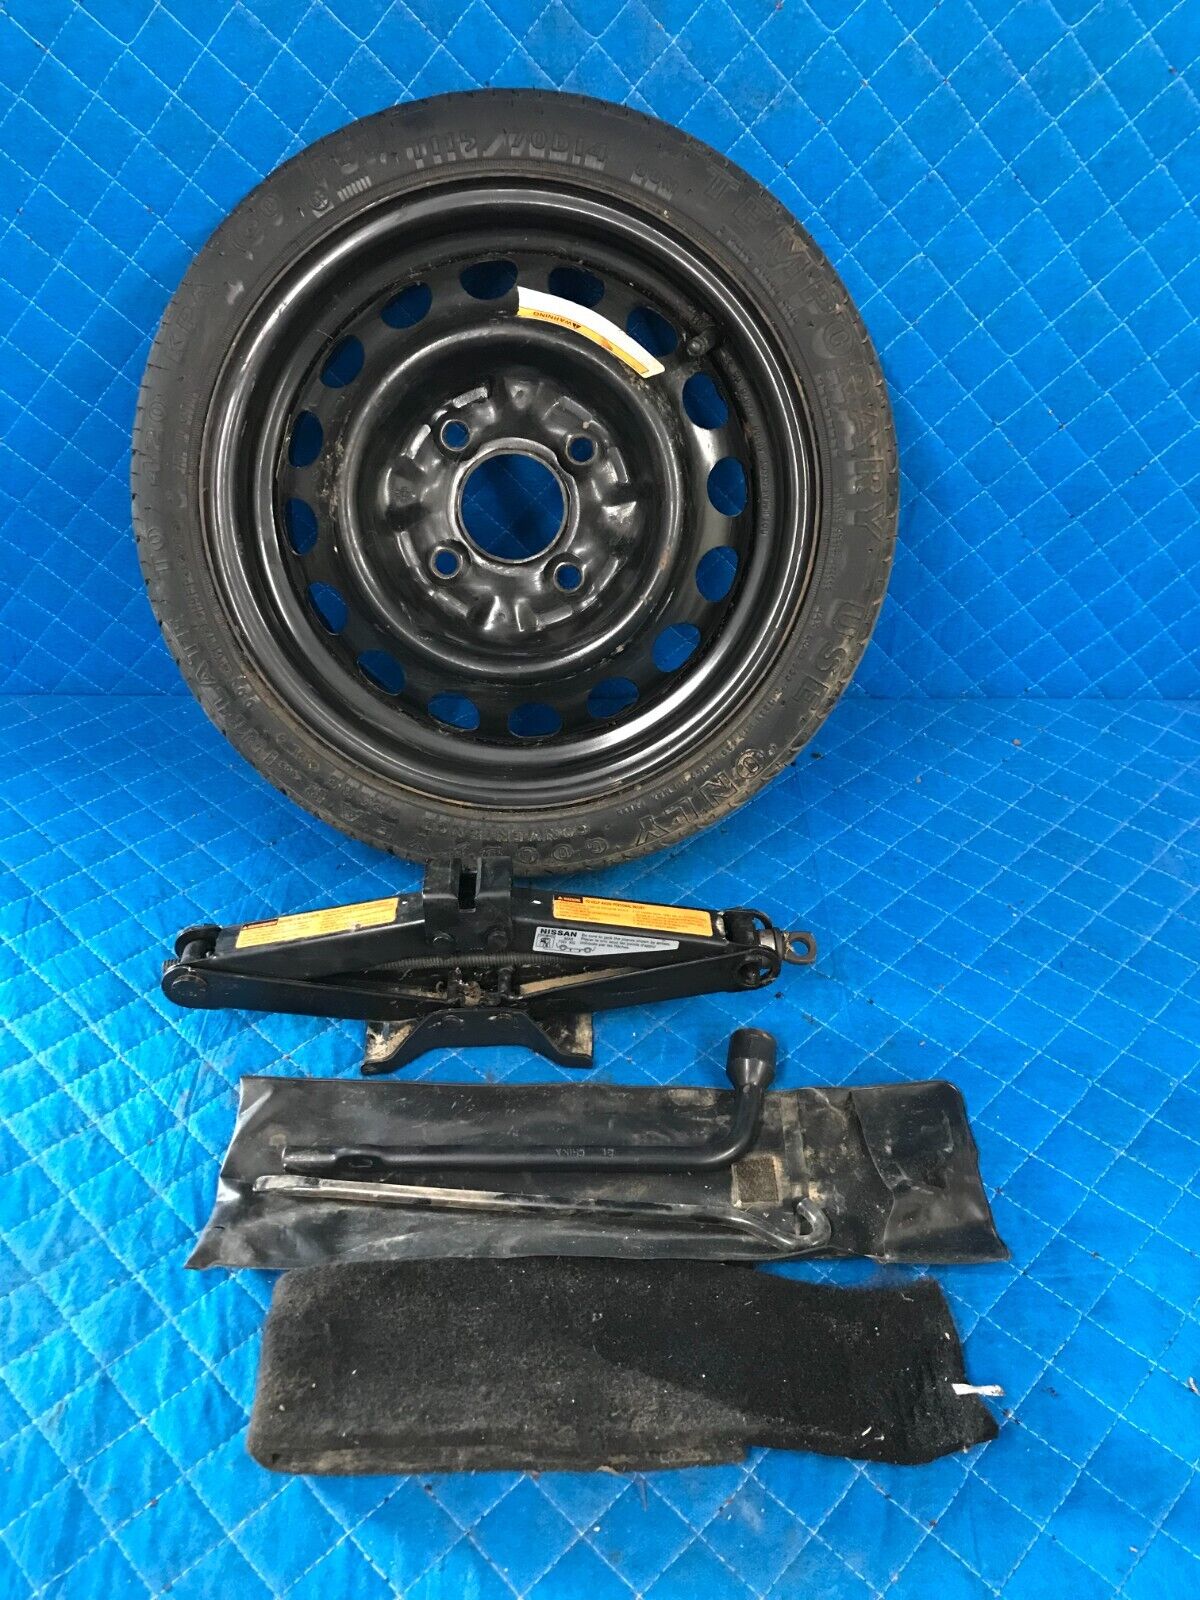 00-06 Nissan Sentra Spare Donut Tire Wheel Rim Goodyear Jack Kit 115/70D14 - 5